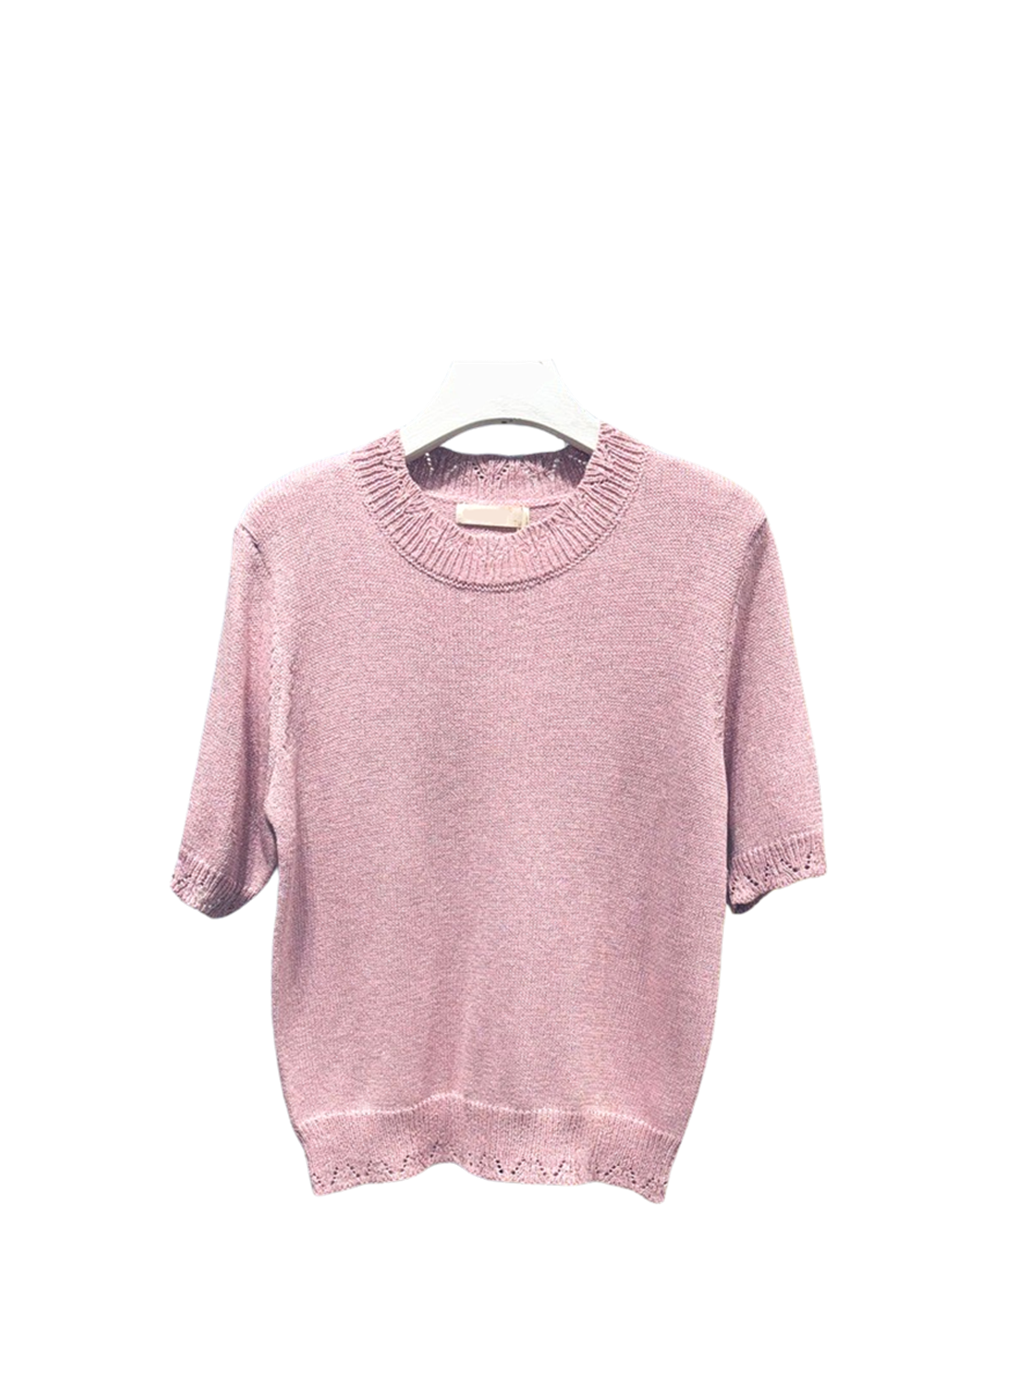 Shirt Stilo Pink.Jpg